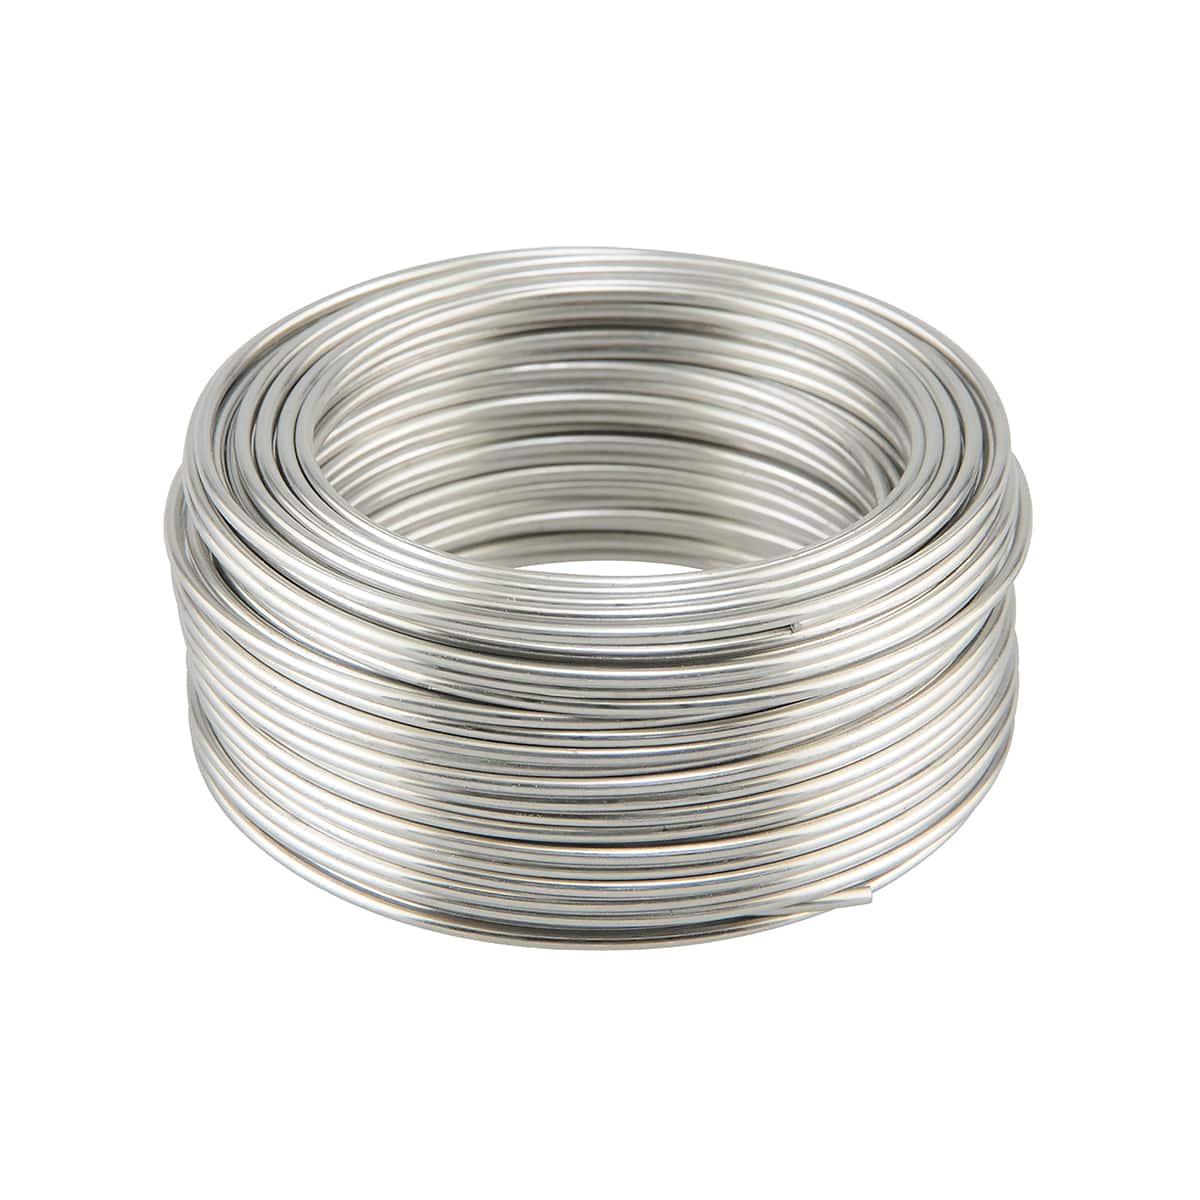 24 Pack: Aluminum Hobby Wire